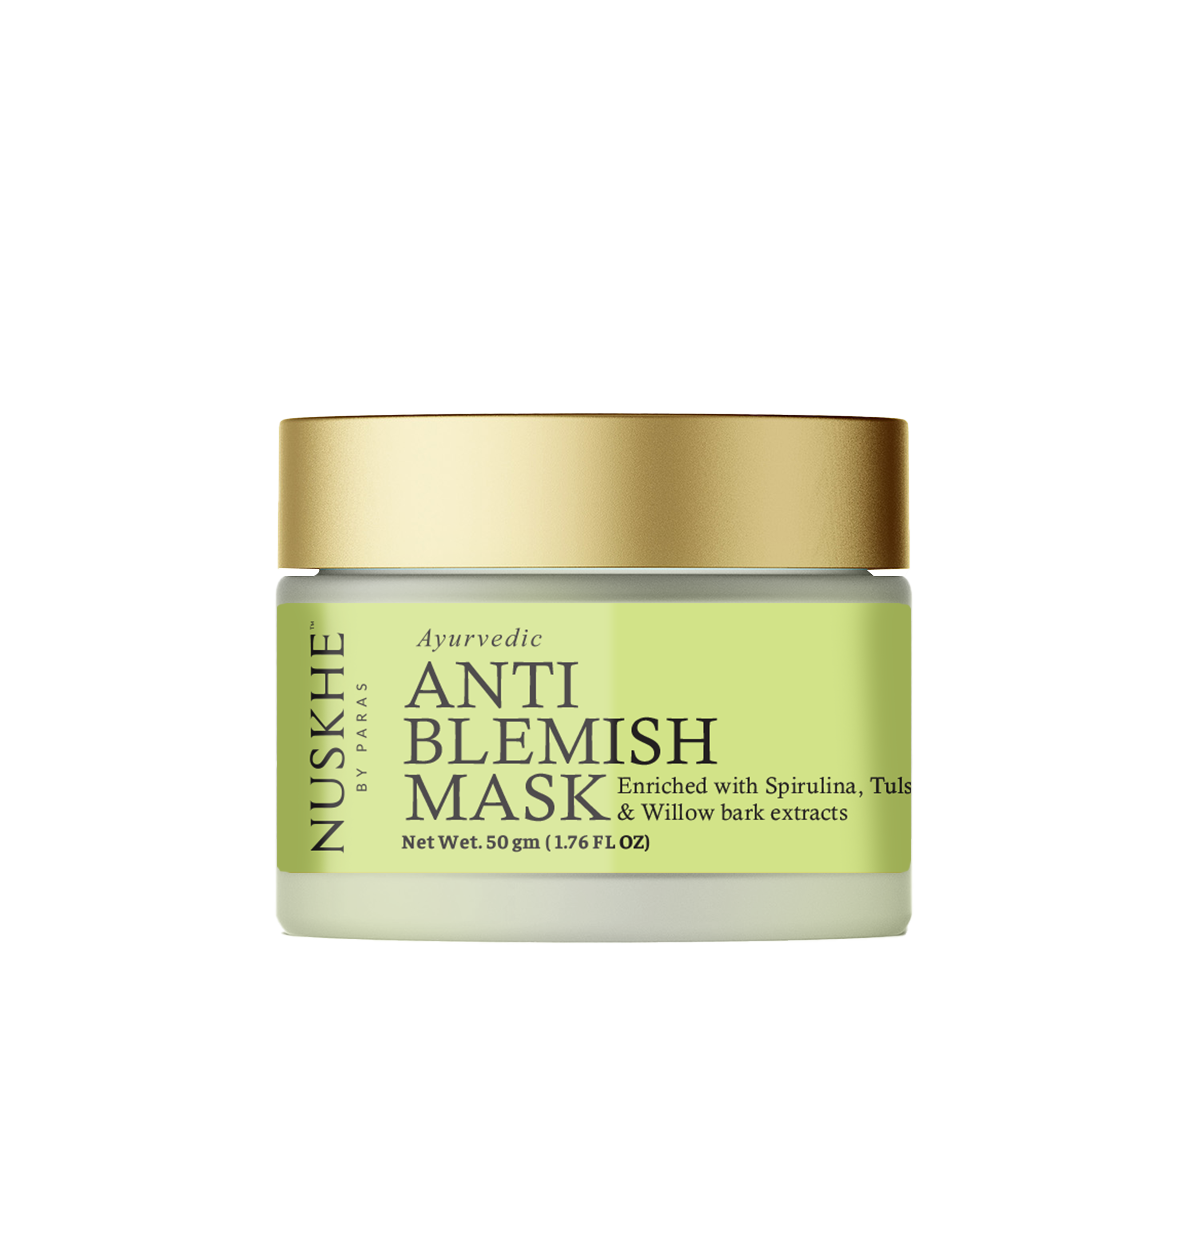 Nuskhe By Paras Ayurvedic Anti Blemish Mask for Men and Women-50gm | Anti Blemish | Clears blackheads | Controls Excess Oil | Spirulina | Tea Tree | Tulsi | Goji berry | Antioxidants |